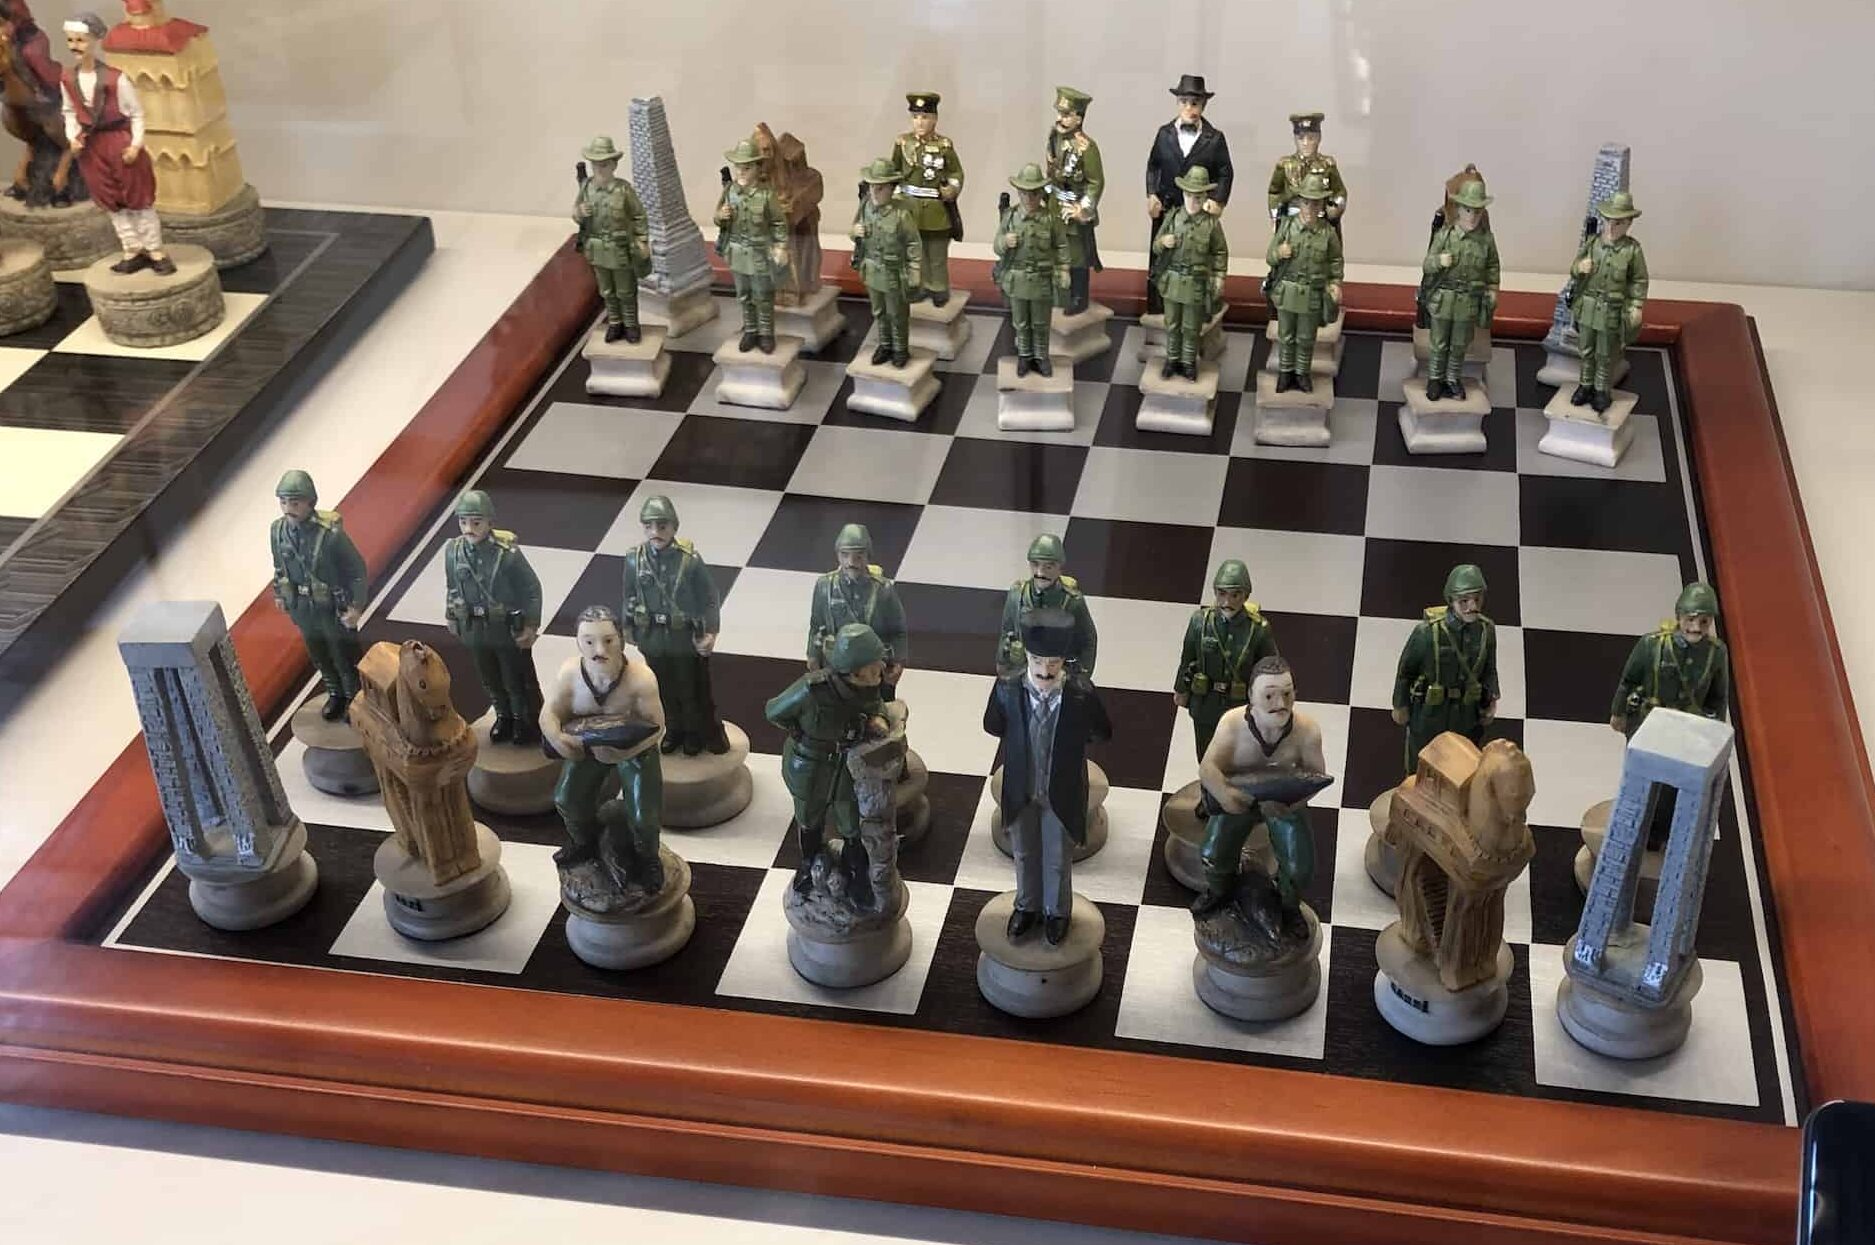 Gallipoli Campaign chess set (Turkey) at the Gökyay Foundation Chess Museum in Ankara, Turkey